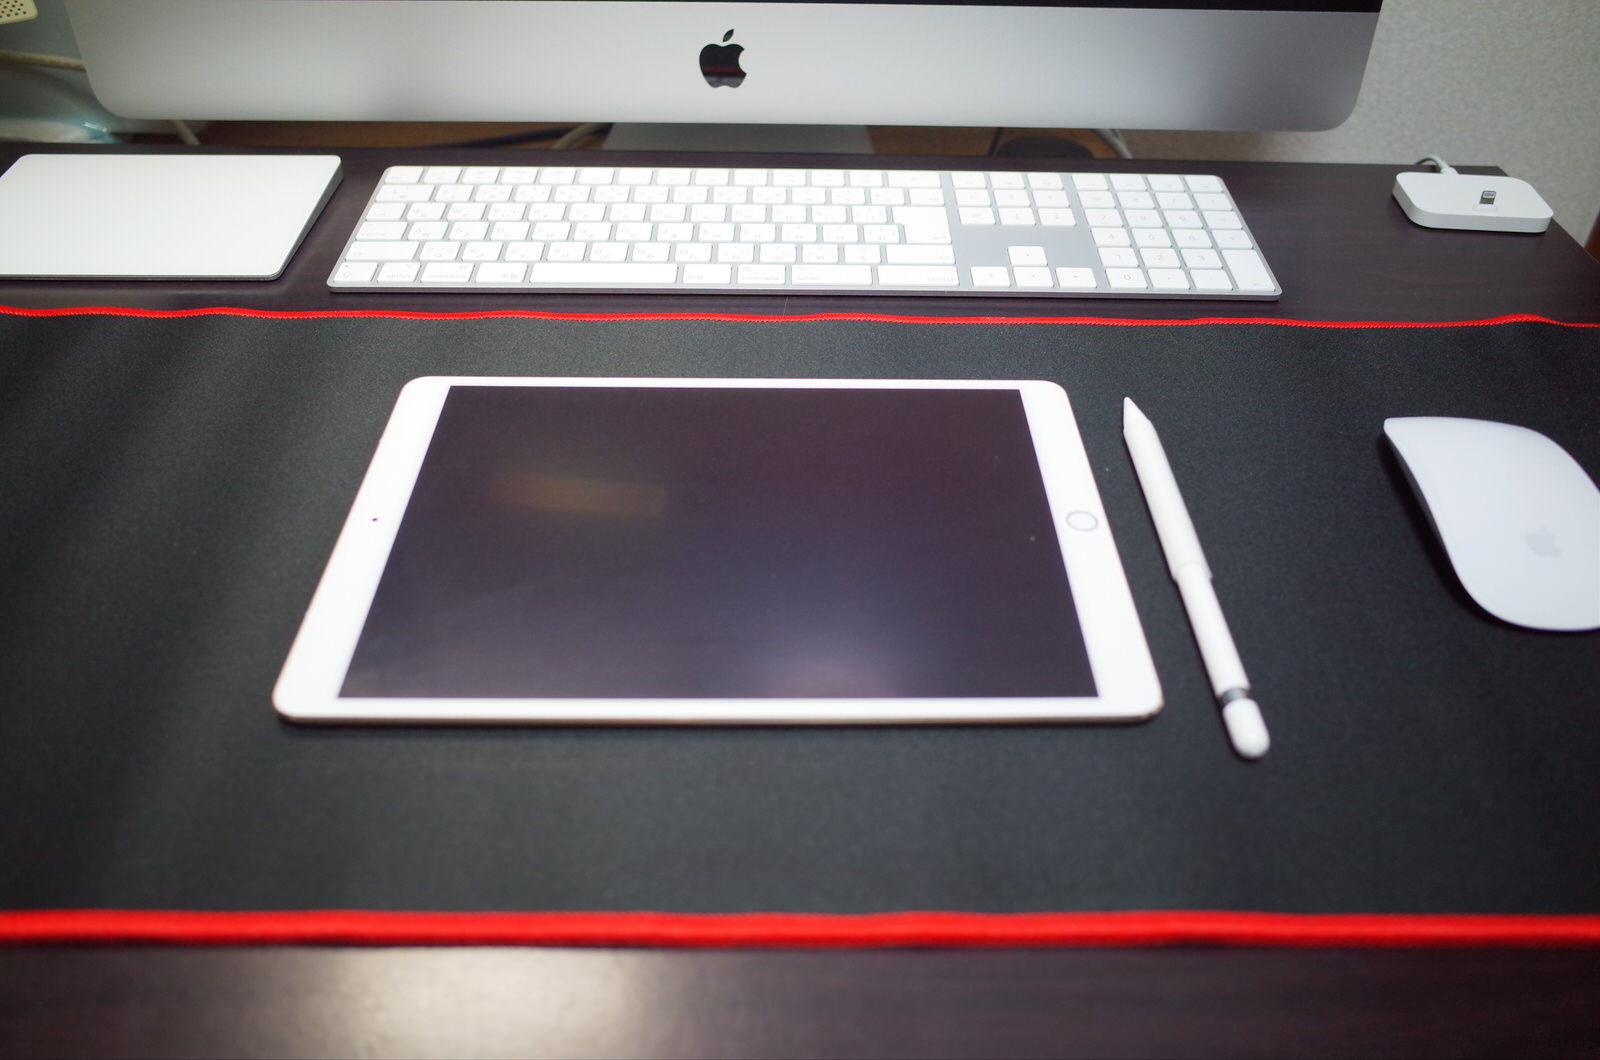 [Apple]Apple Special EventでApple Pencilに対応した新しい「iPad」が発表されましたね